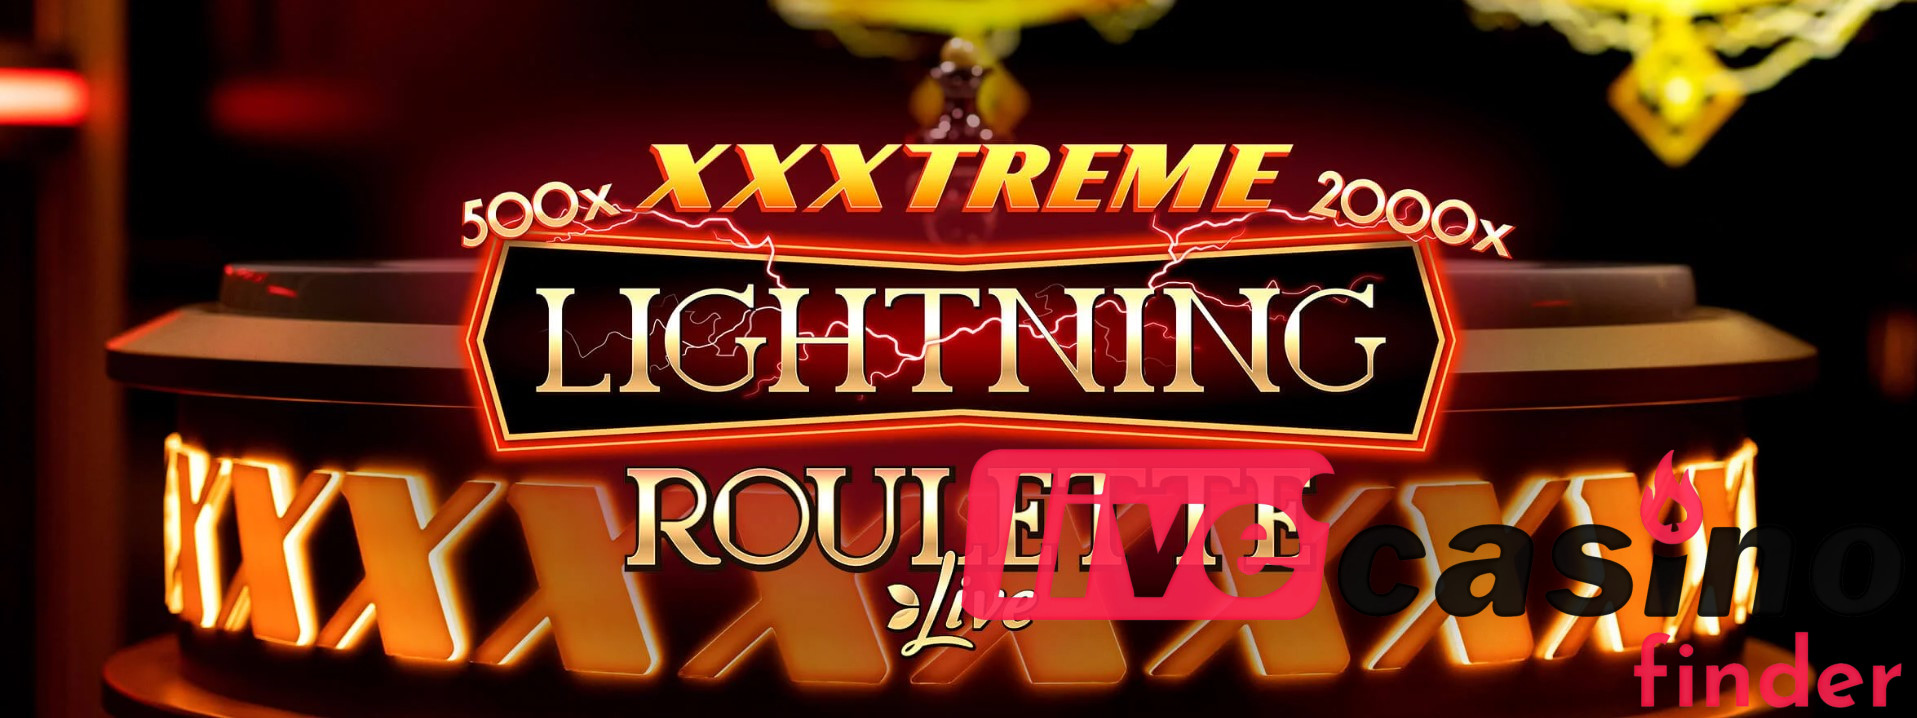 Jogo XXXTreme Lightning Roulette ao vivo.